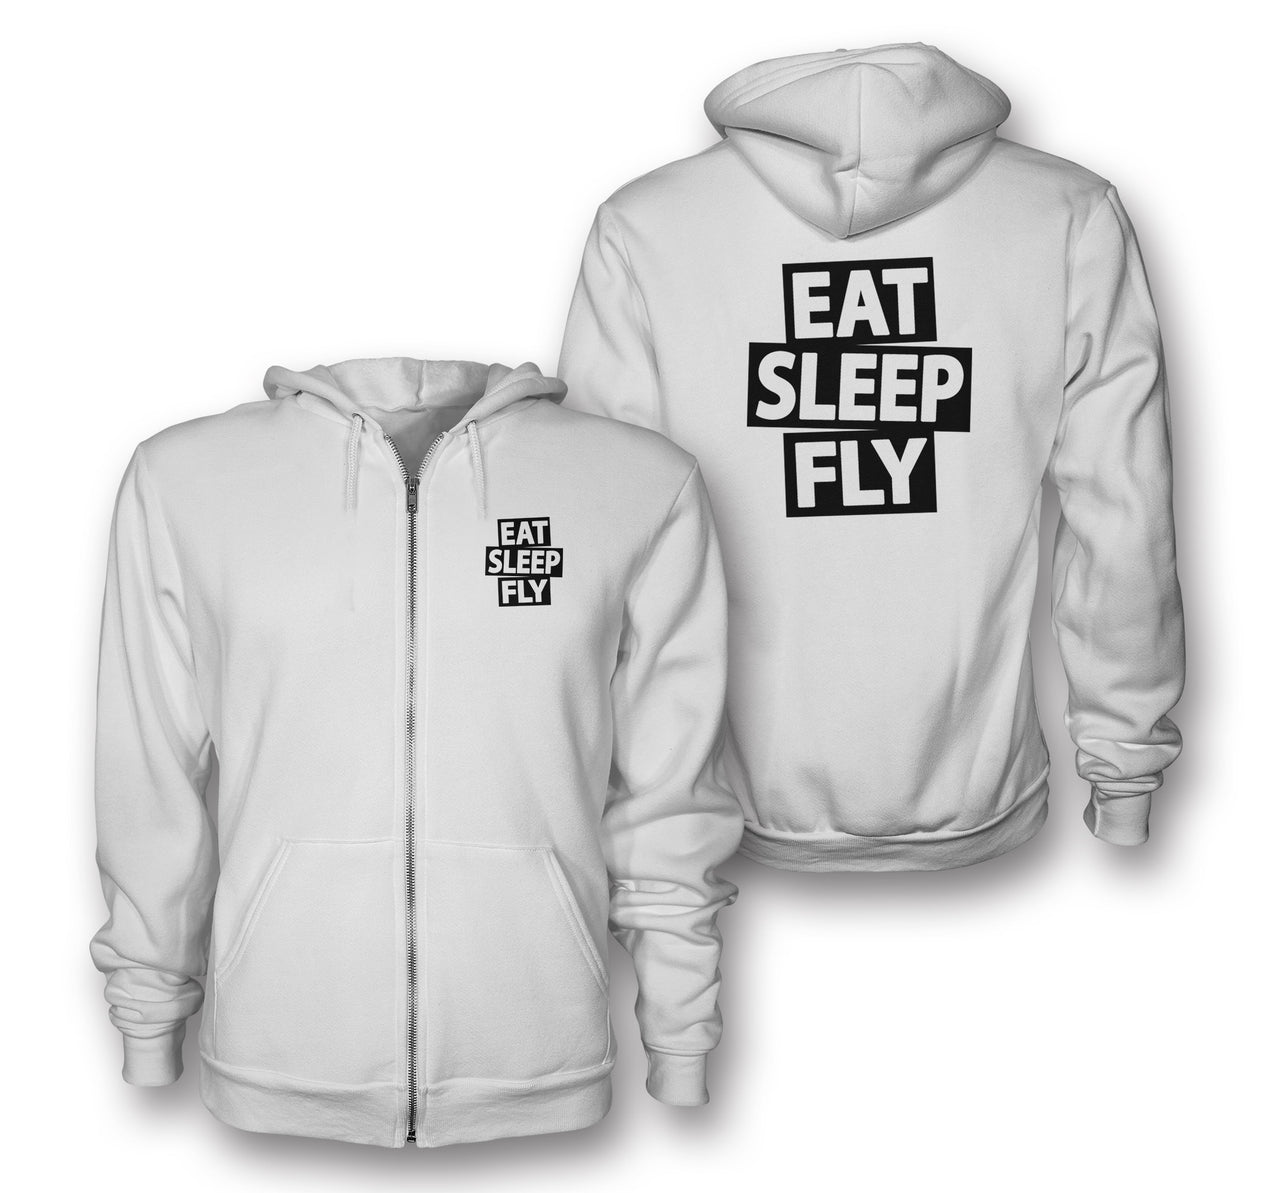 Eat Sleep Fly Designed Zipped Hoodies